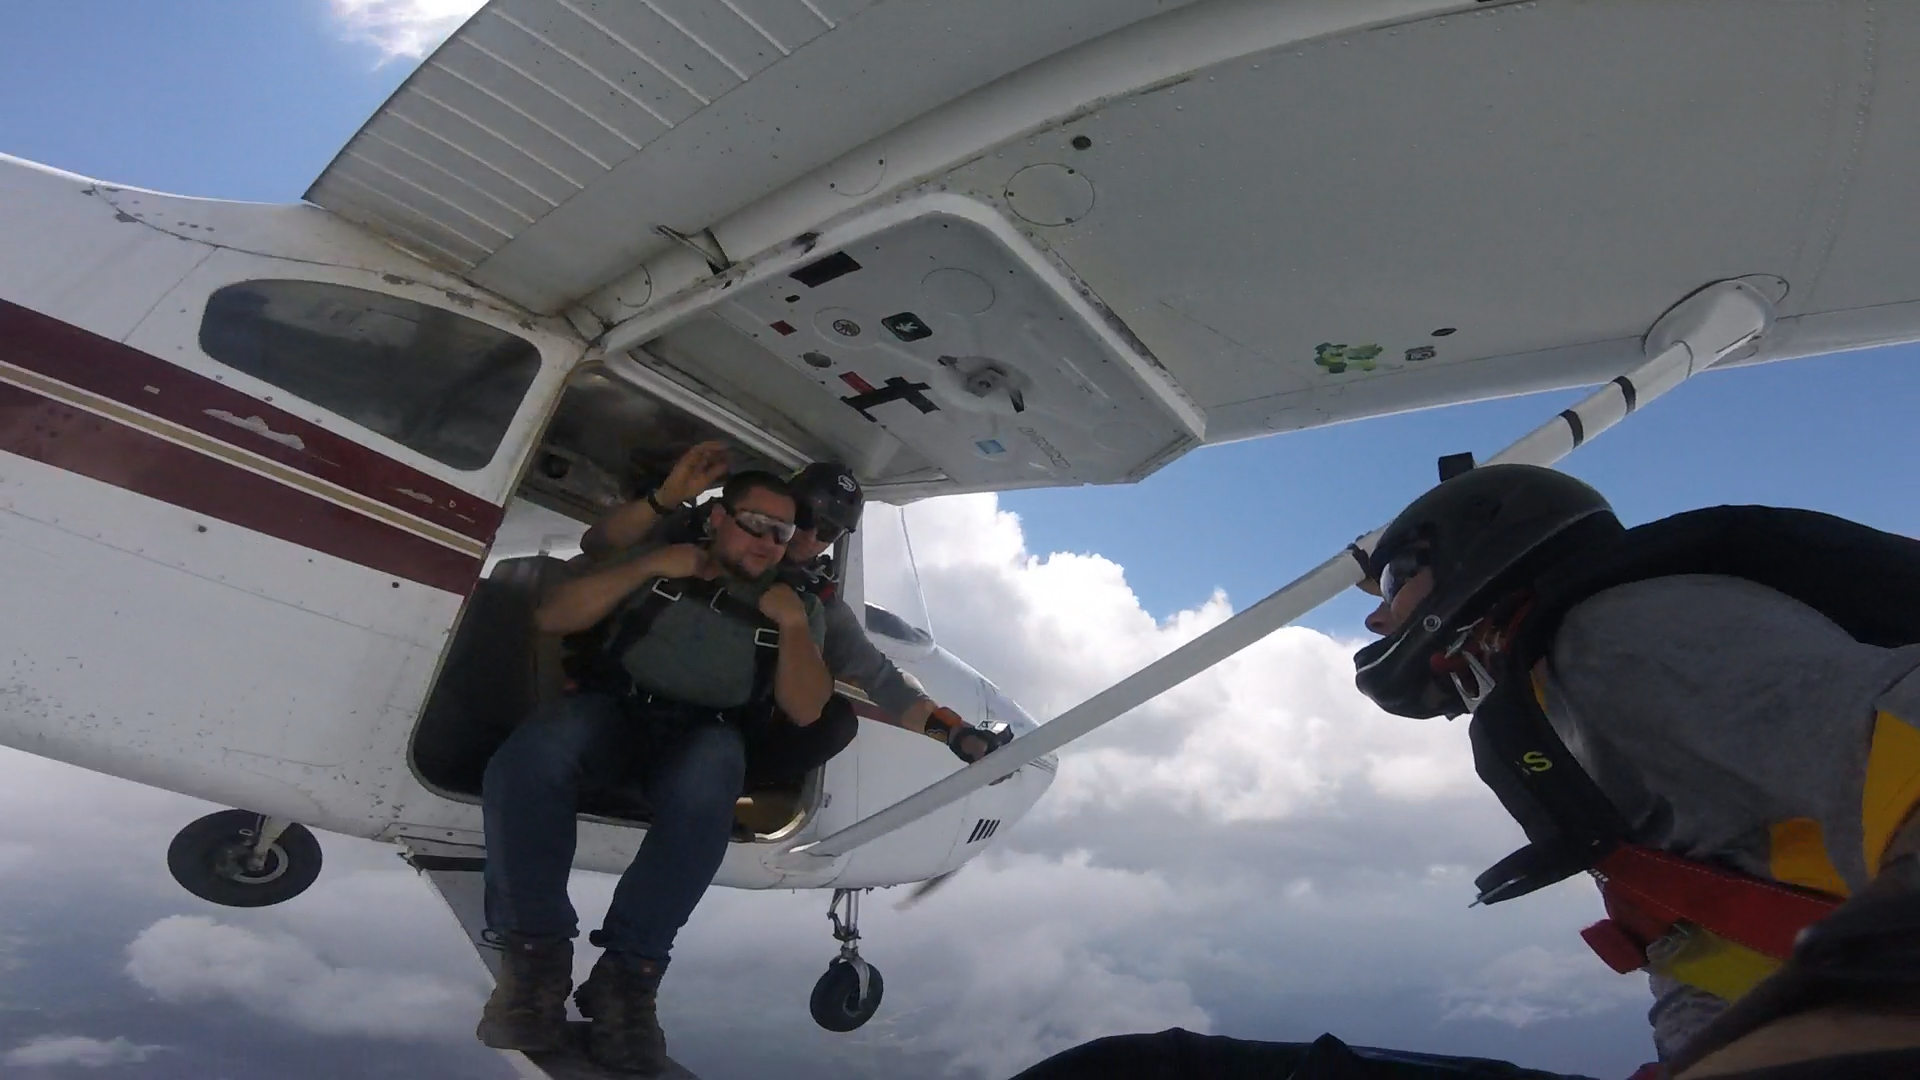 Skydive Mountaineer Opens in West Virginia